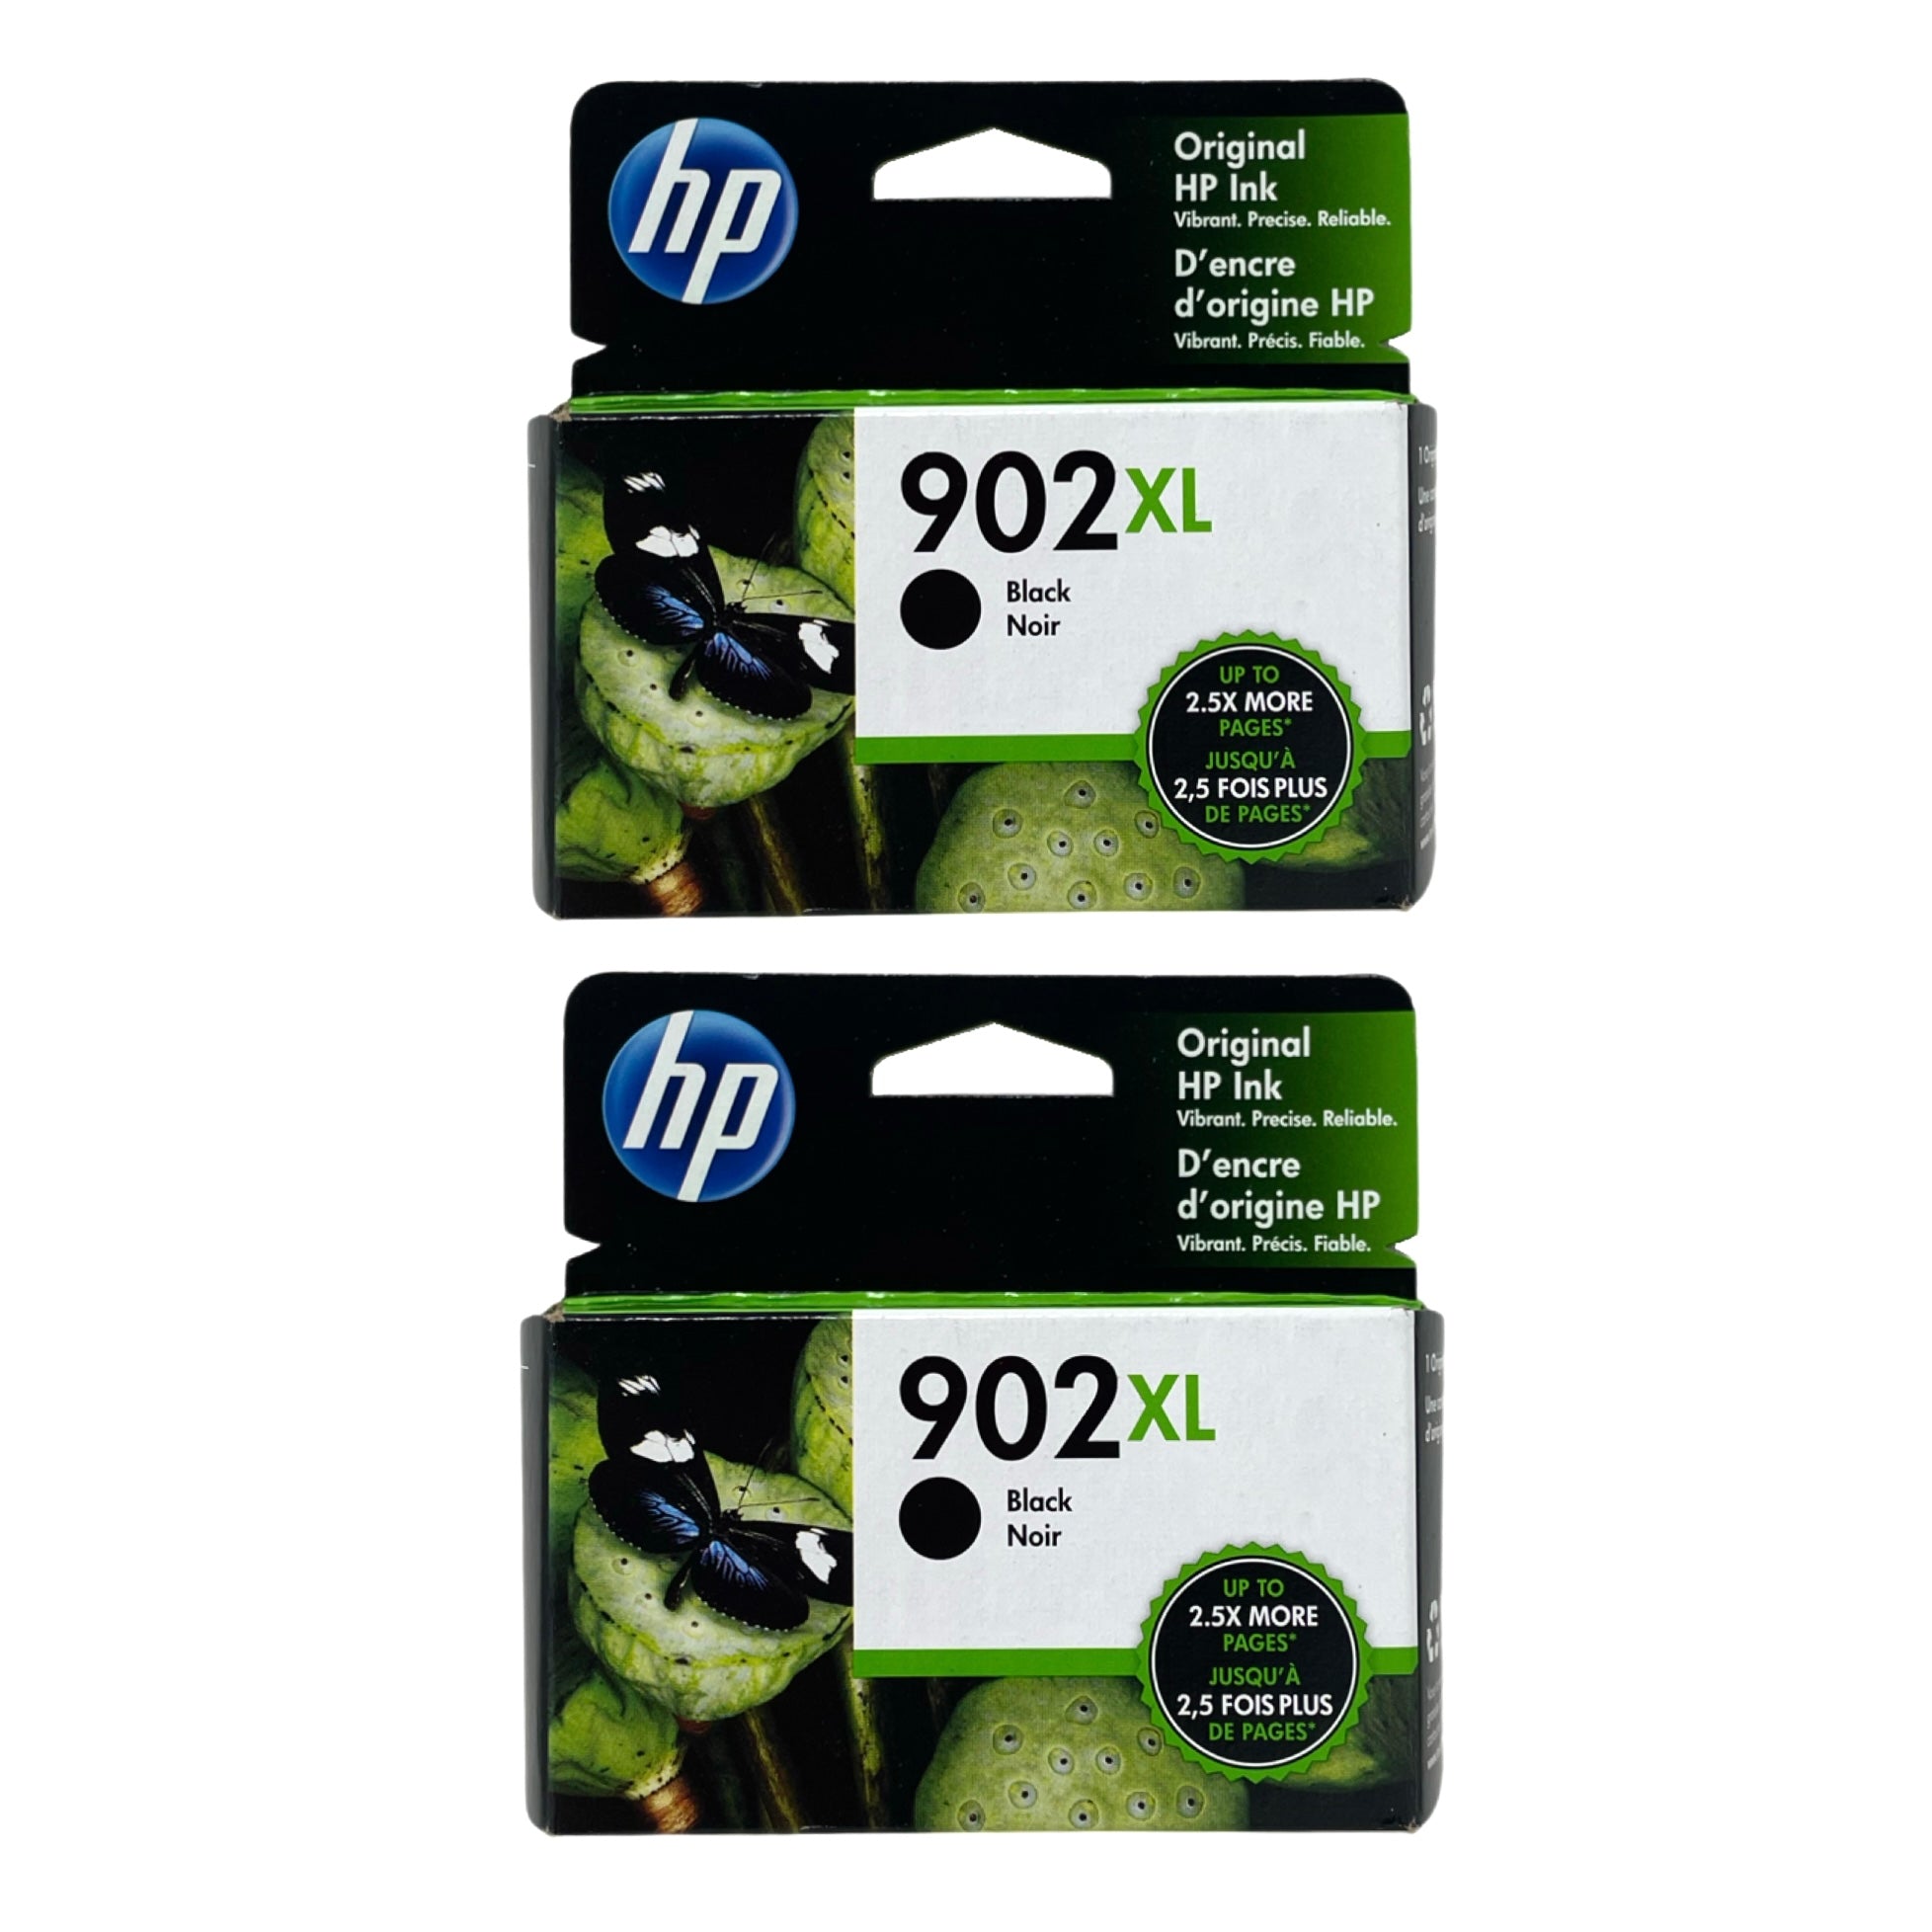 HP 902XL High Yield Ink 2 Pack - Black - Original HP LaserJet Ink Cartridges